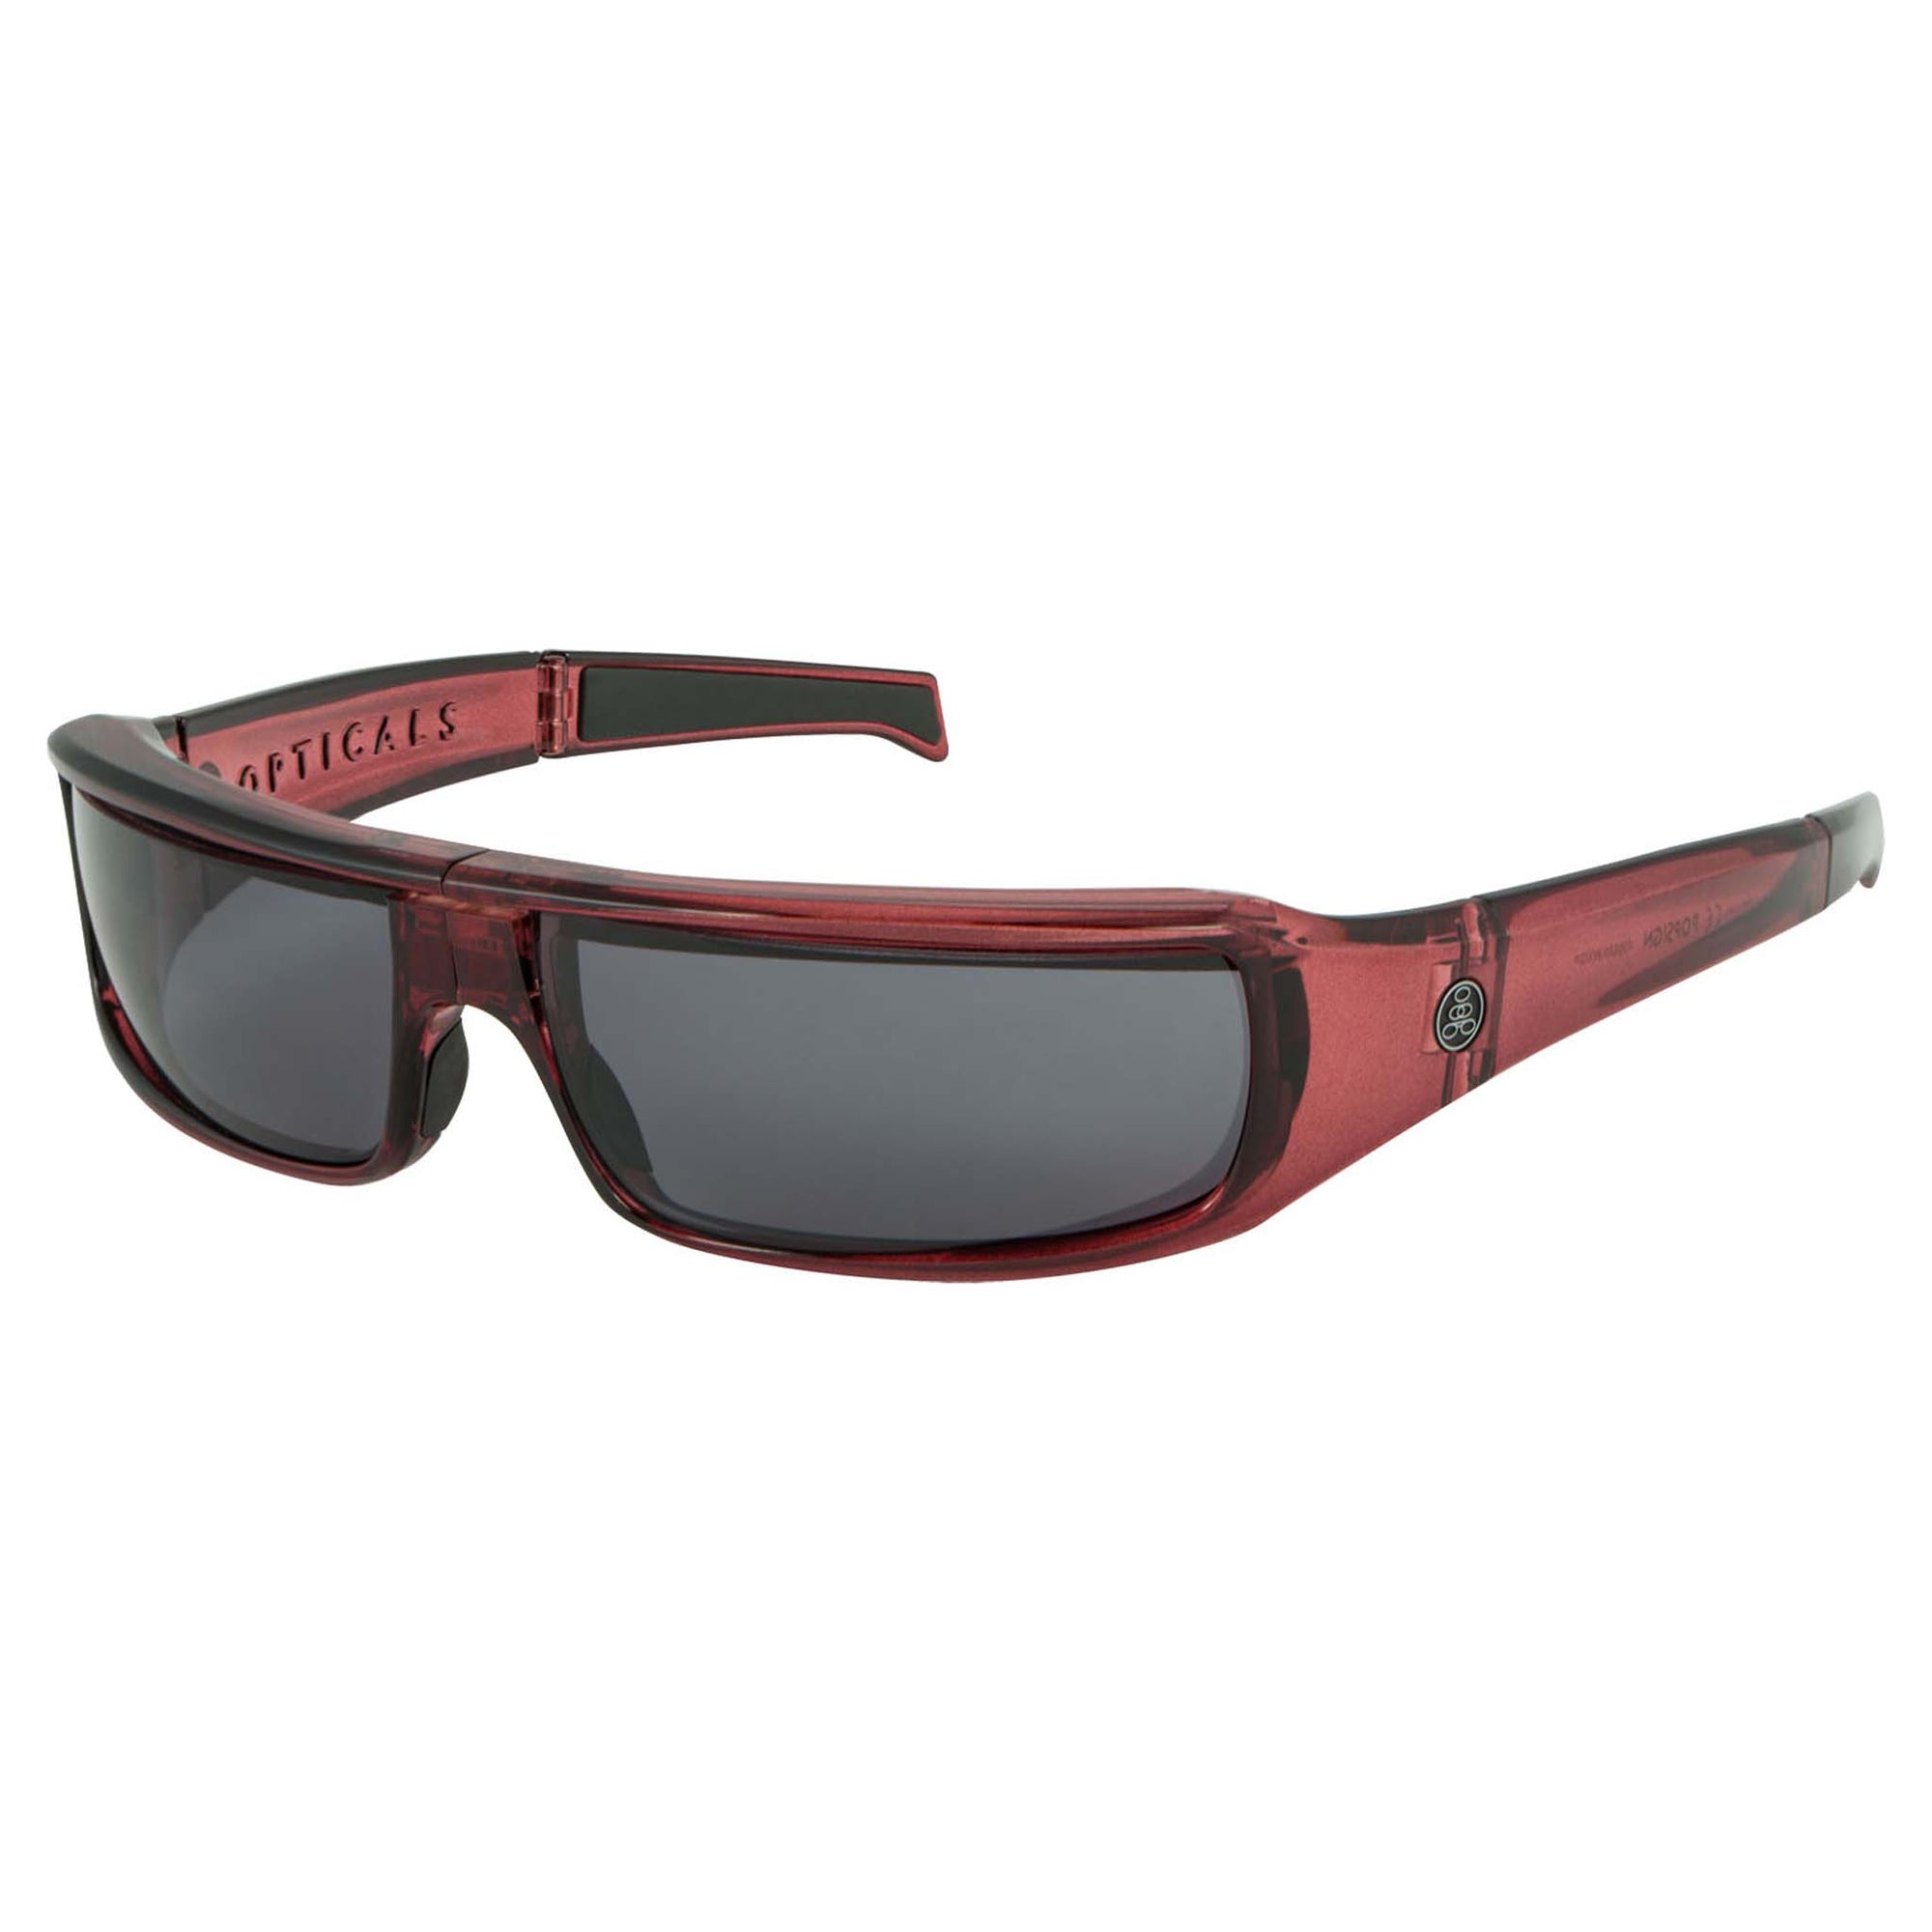 Popticals, Premium Compact Sunglasses, PopSign, 020020-WXGP, Polarized Sunglasses, Gloss Wine Crystal Frame, Gray Lenses, Glam View